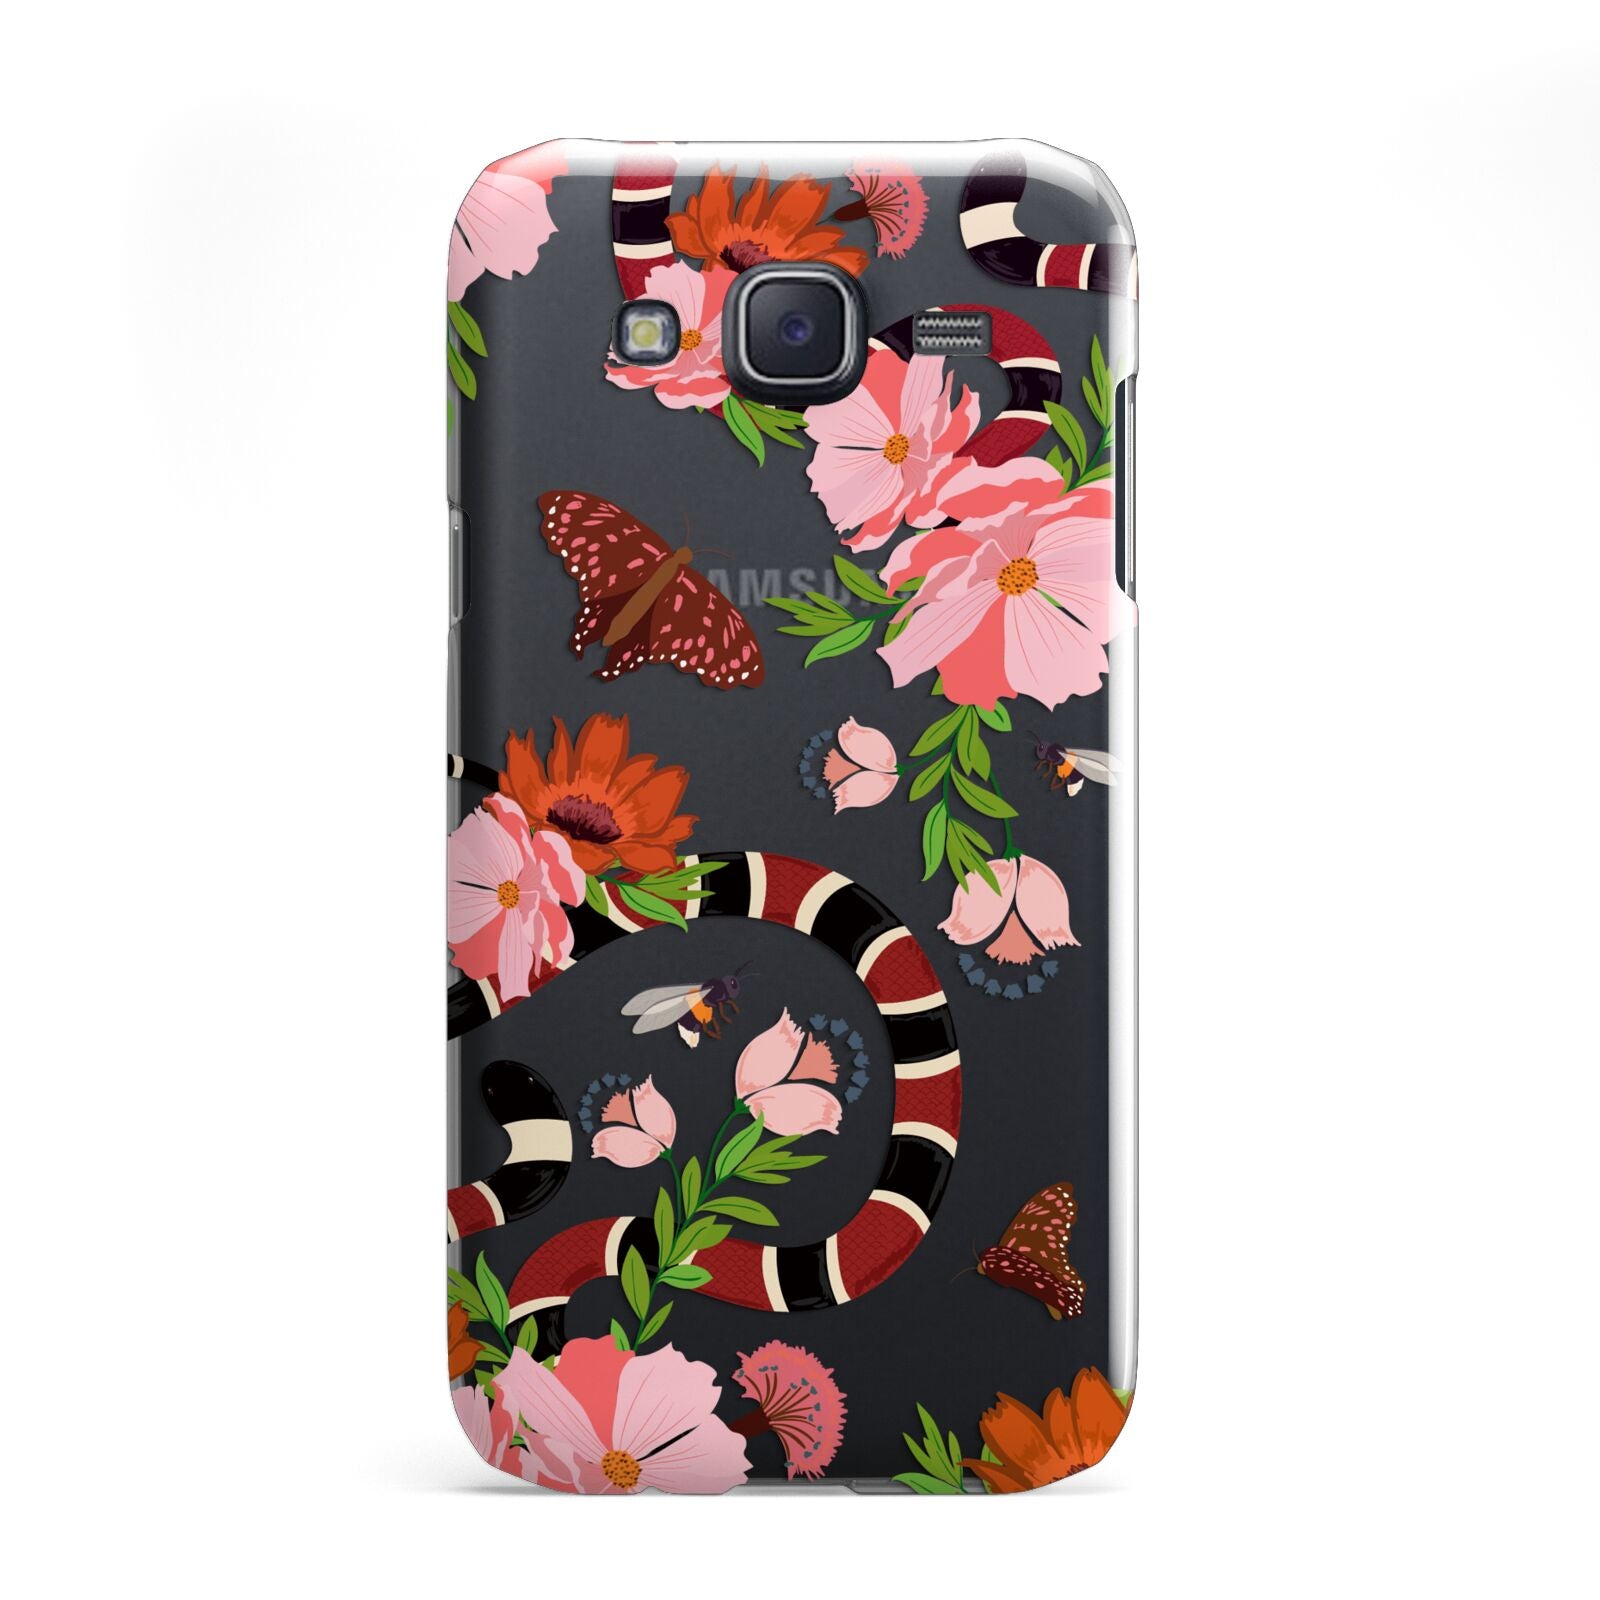 Floral Snake Samsung Galaxy J5 Case